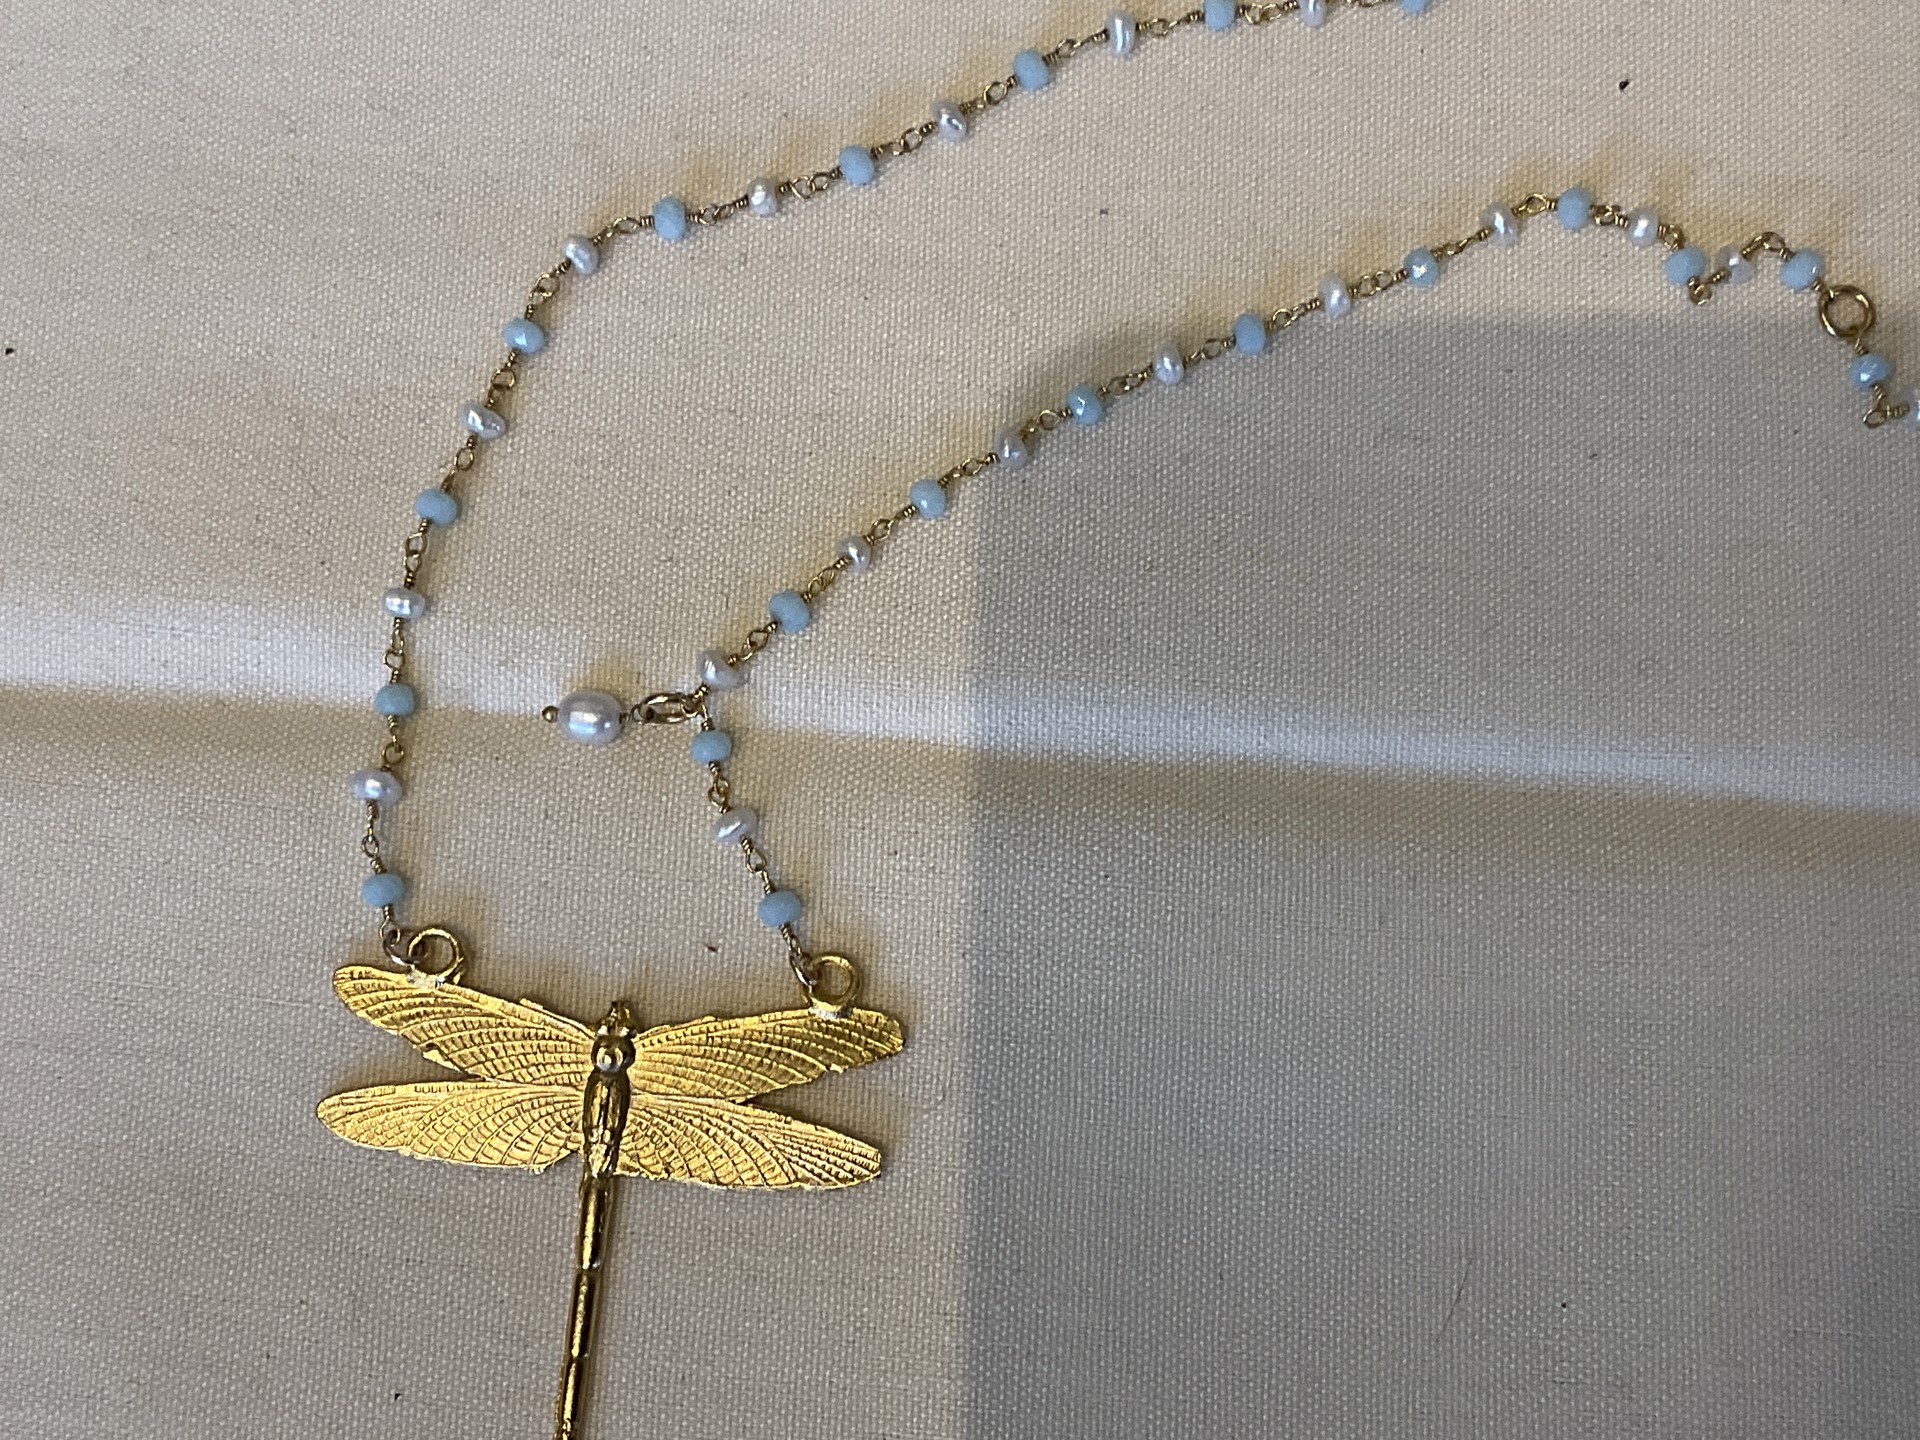 KB-N151 GVML Amazonite and Pearl Necklace GldPltd Dragonfly by Karen Birchmier